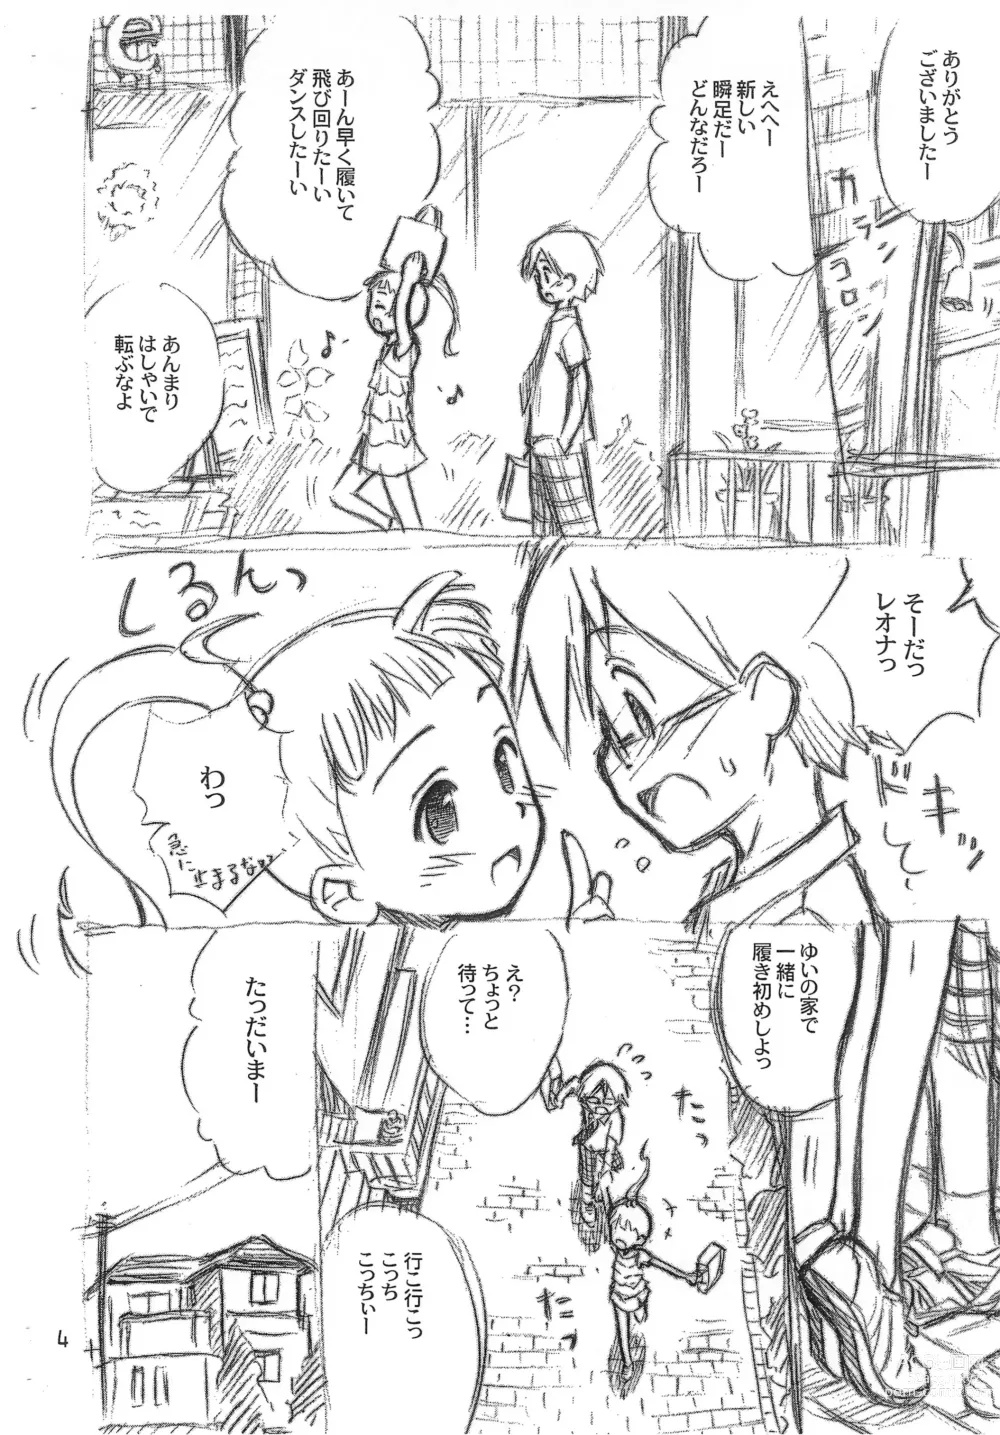 Page 4 of doujinshi Joshi ga Shunsoku de Nani ga Warui!?